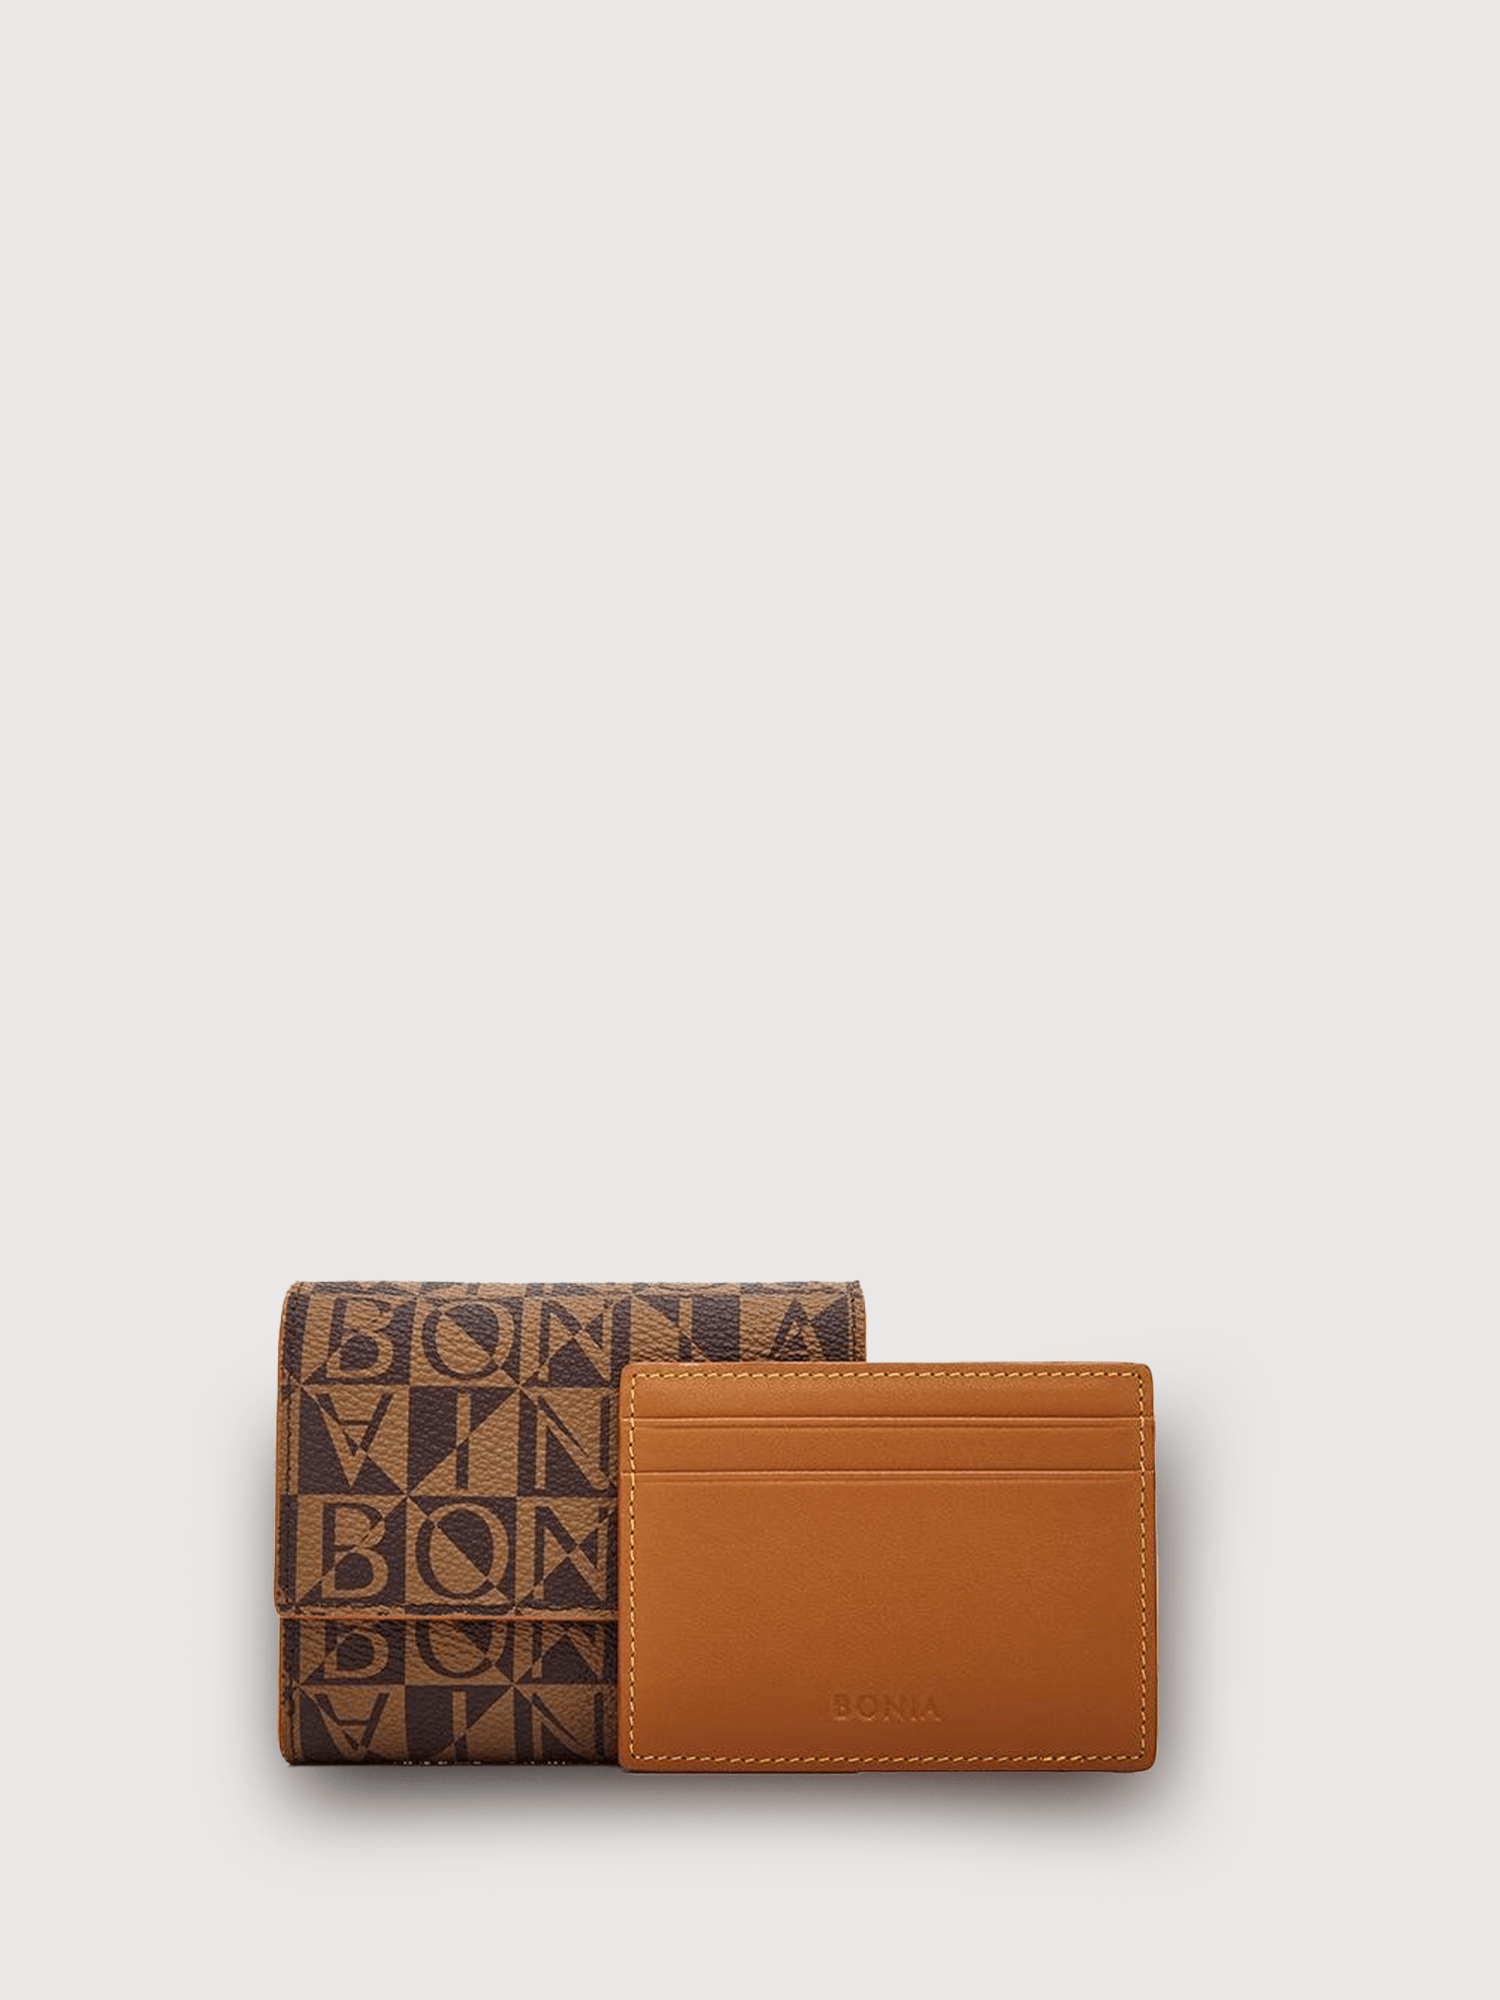 Bonia Monogram Short 3-Fold Wallet-Brown – OG Singapore